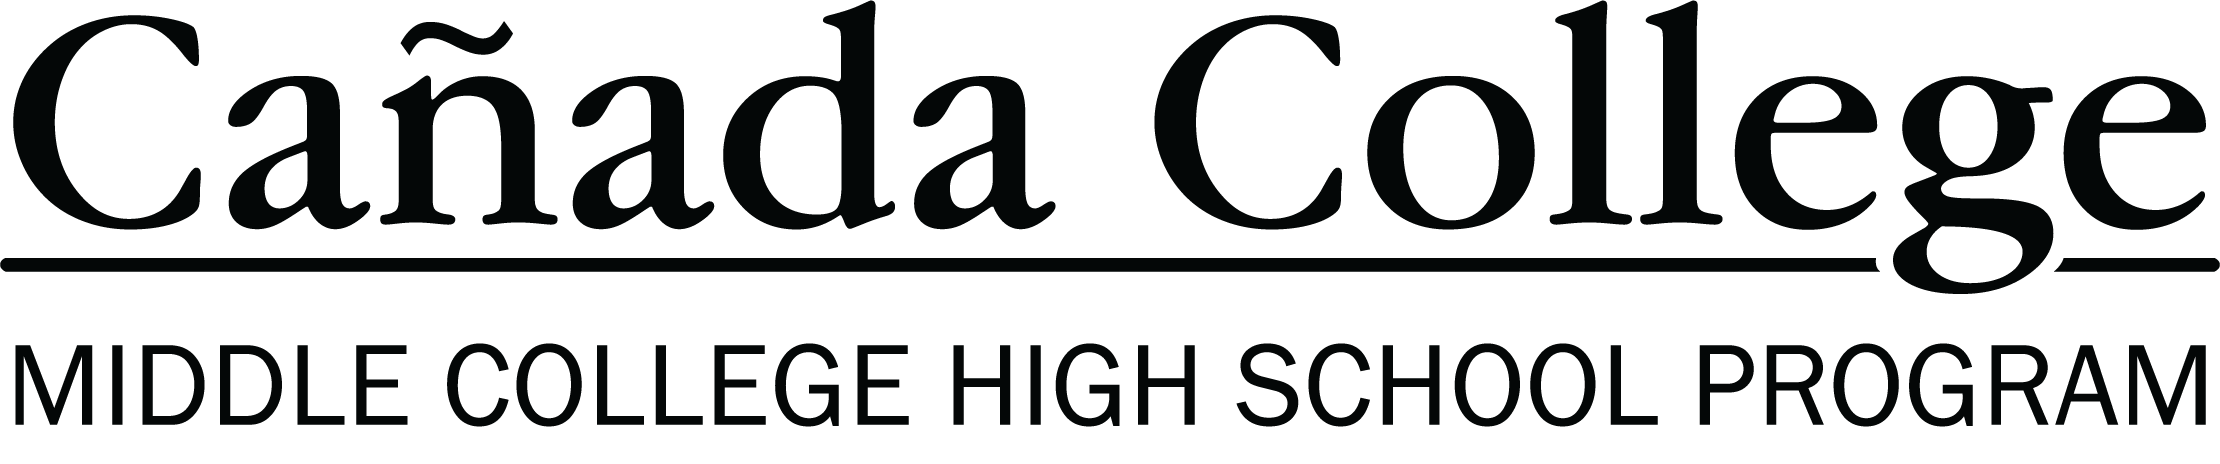 Cañada College Middle College High School Program Logotype